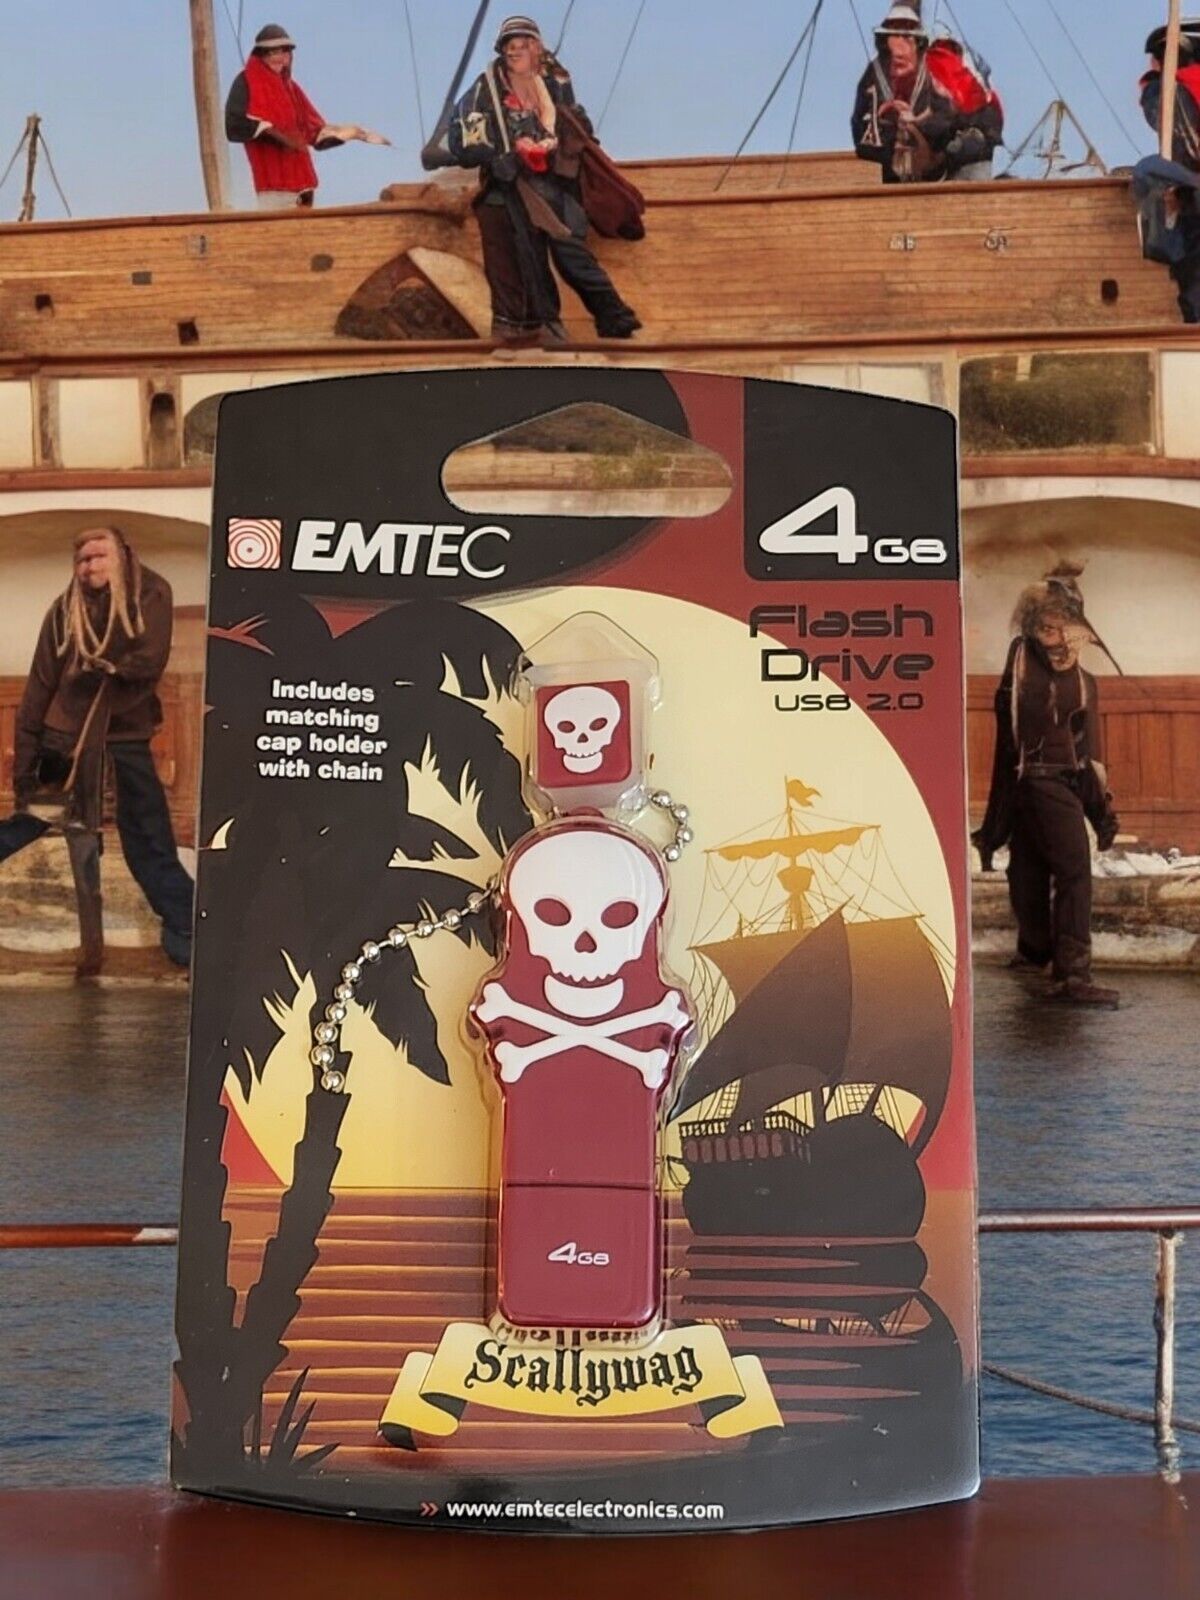 Emtec 4GB Pirate Skull Scallywag USB Flash Drive Matching Cap Holder New